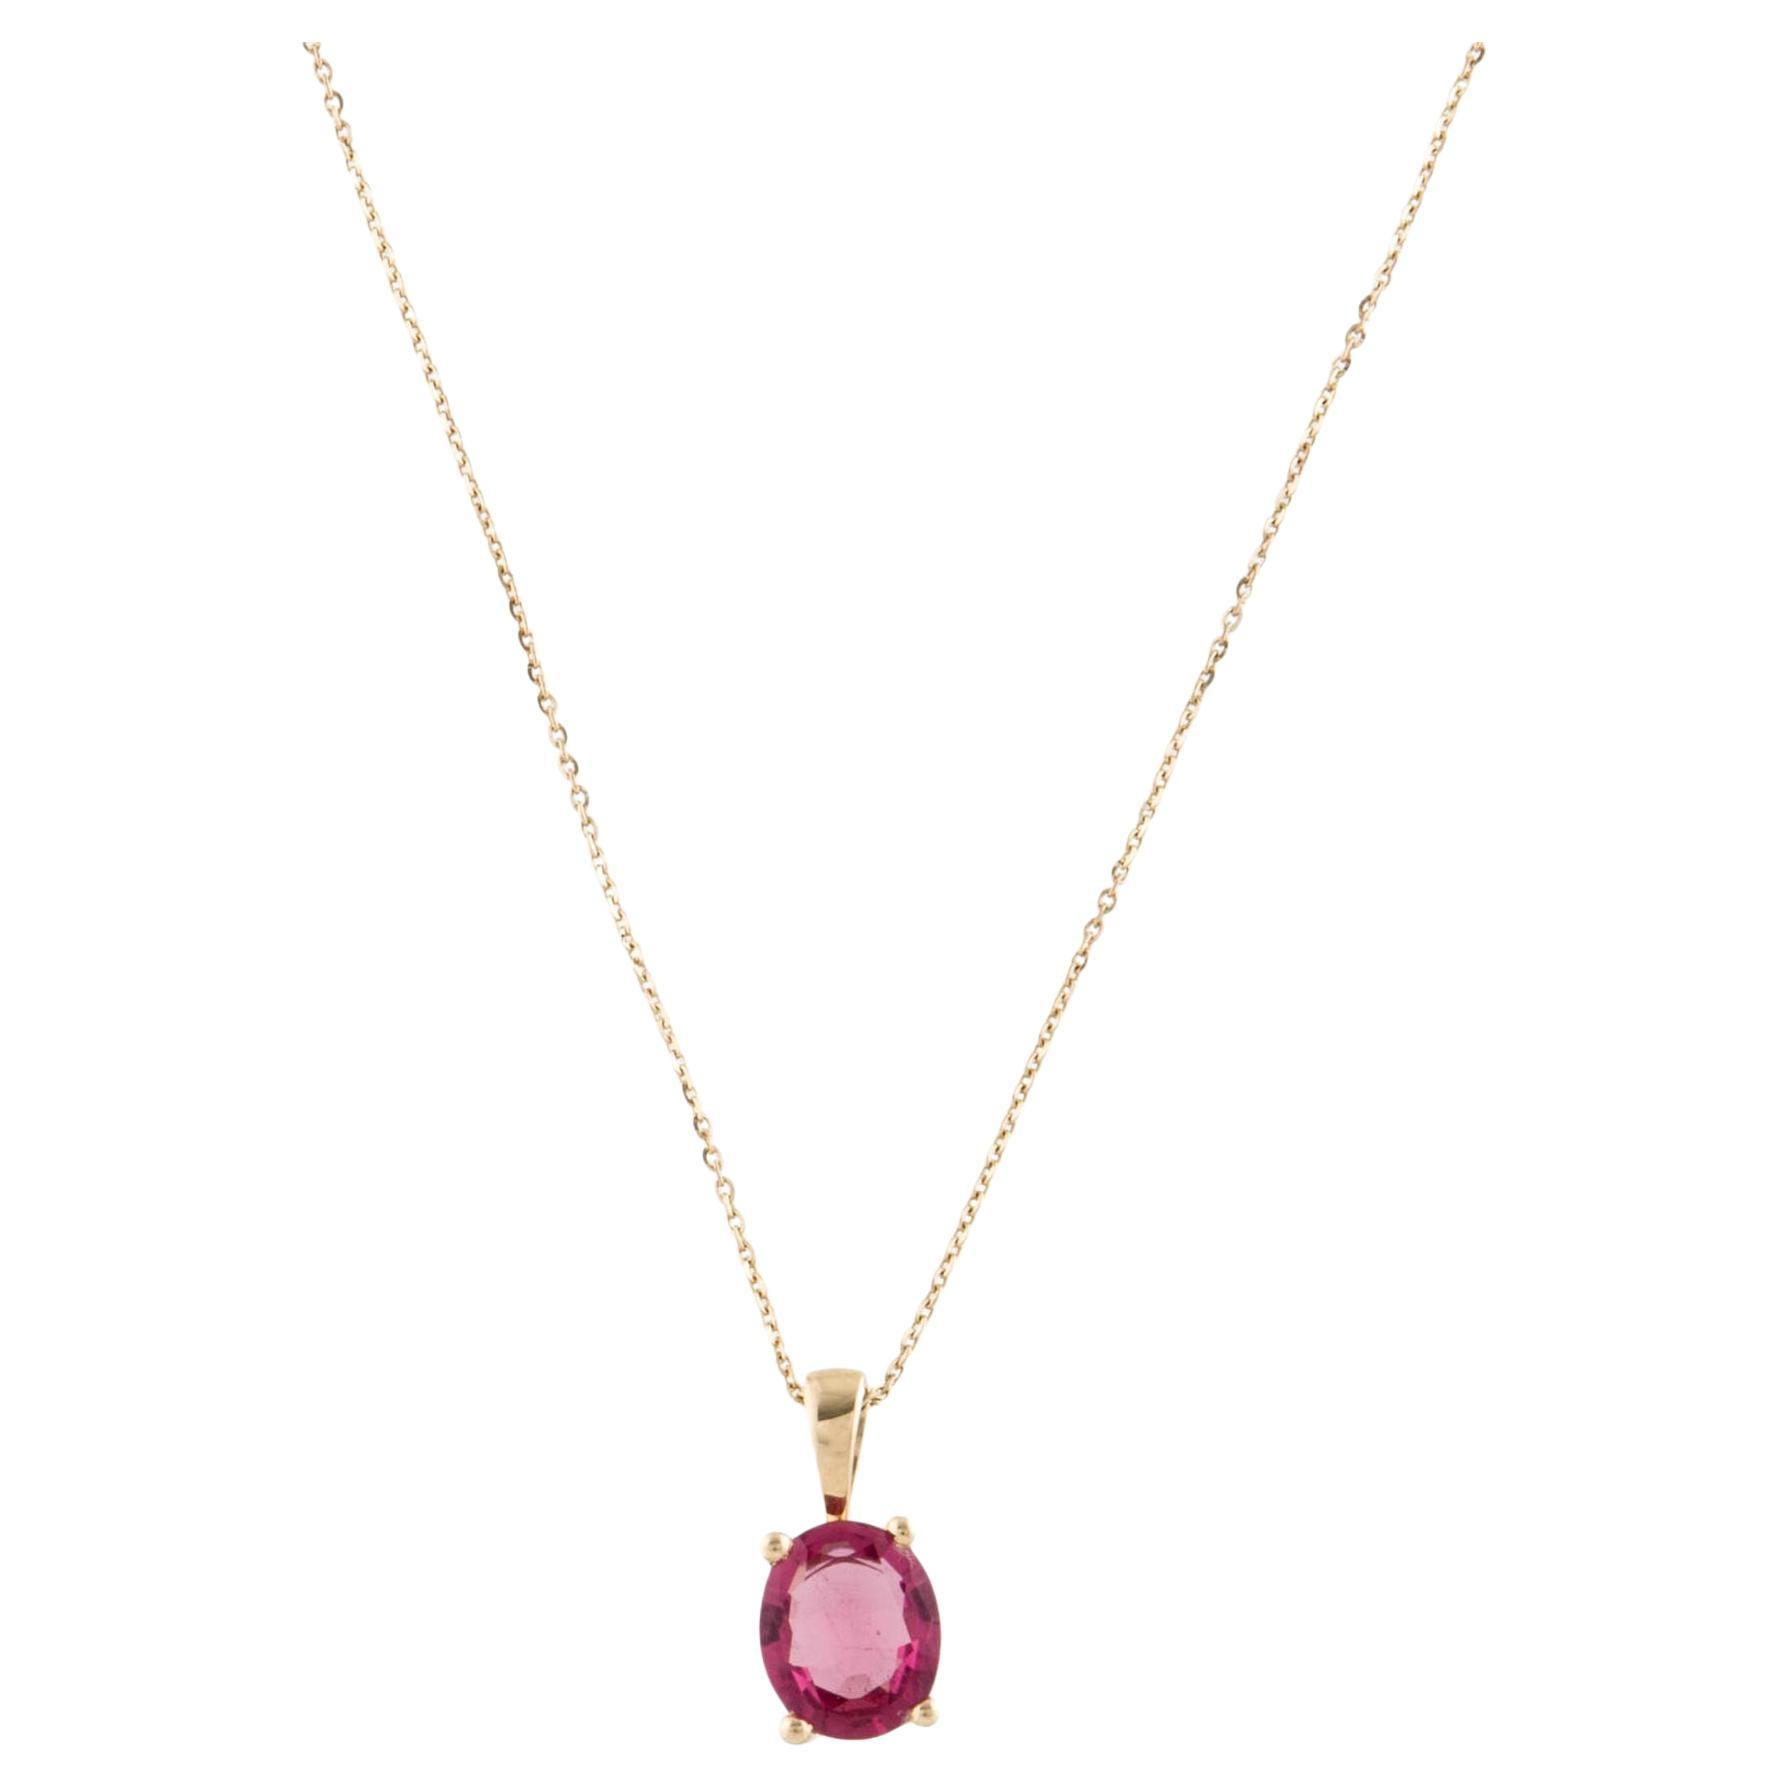 Luxury 14K Tourmaline Pendant Necklace - Stunning Gemstone Statement Jewelry For Sale